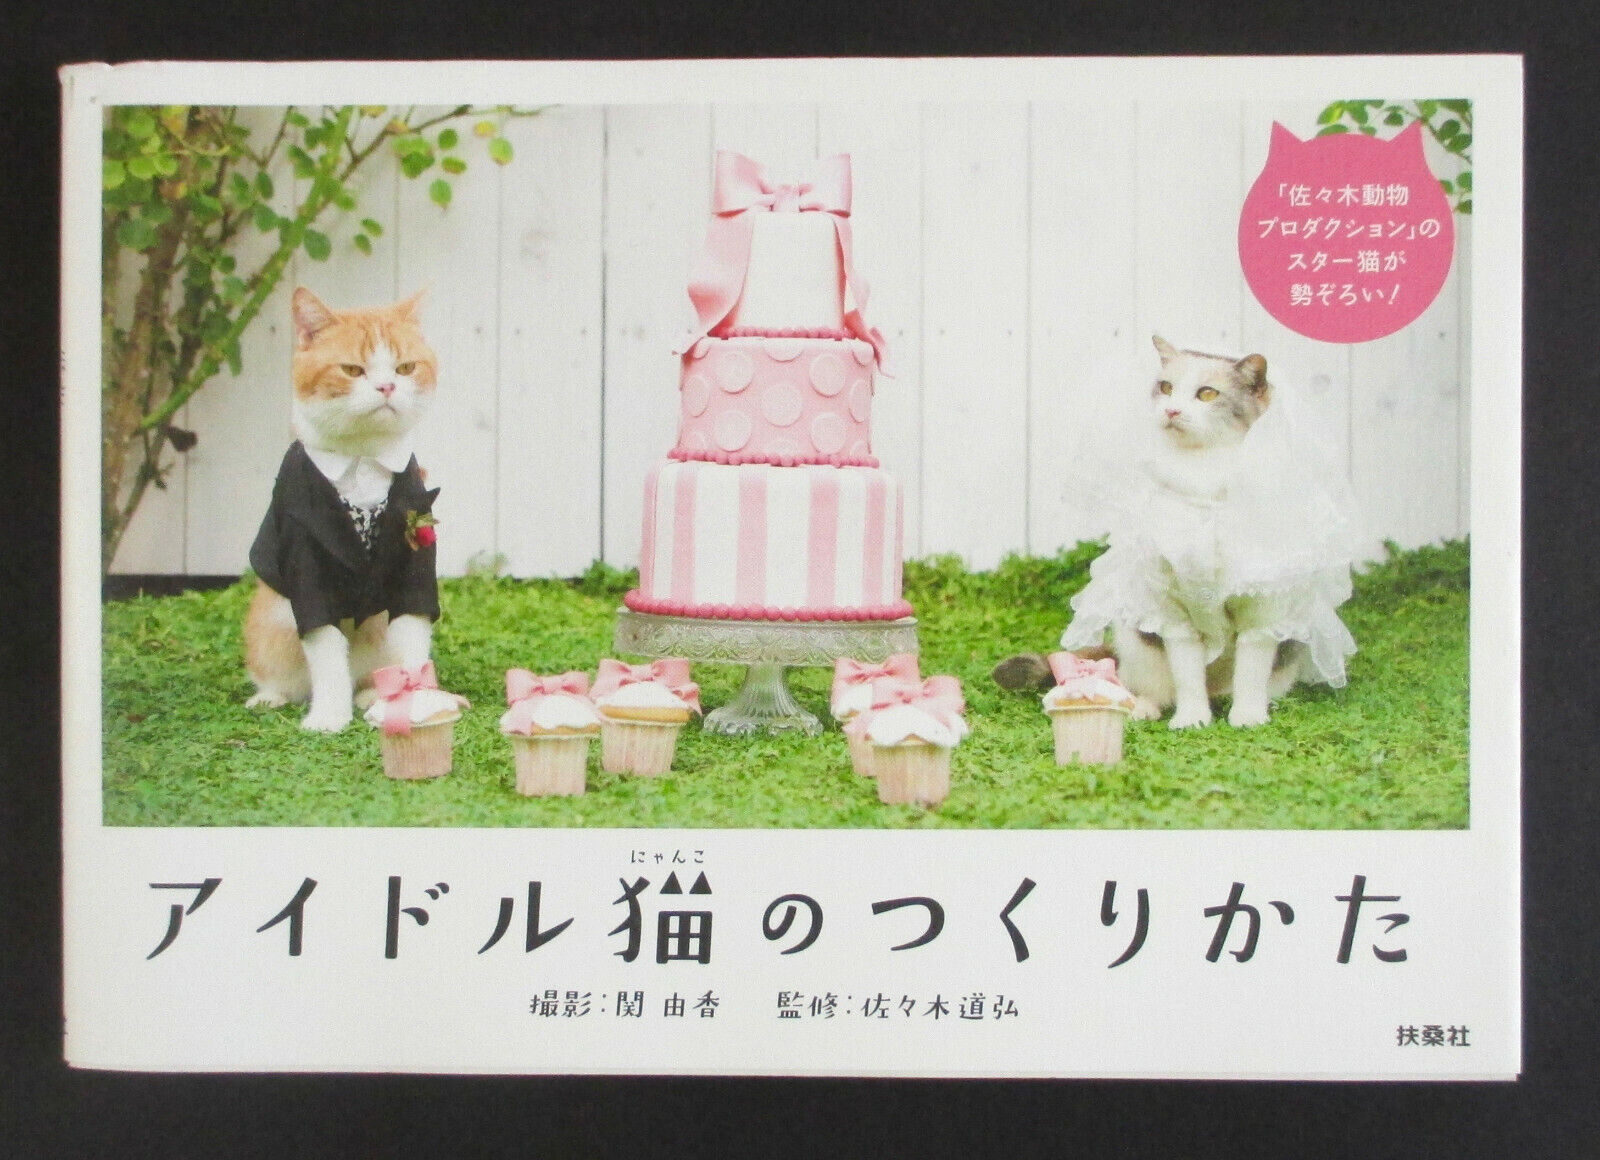 Rare Japan Import CAT'S WEDDING PHOTO BOOK Funny Kitten Pictures Bride Tankobon